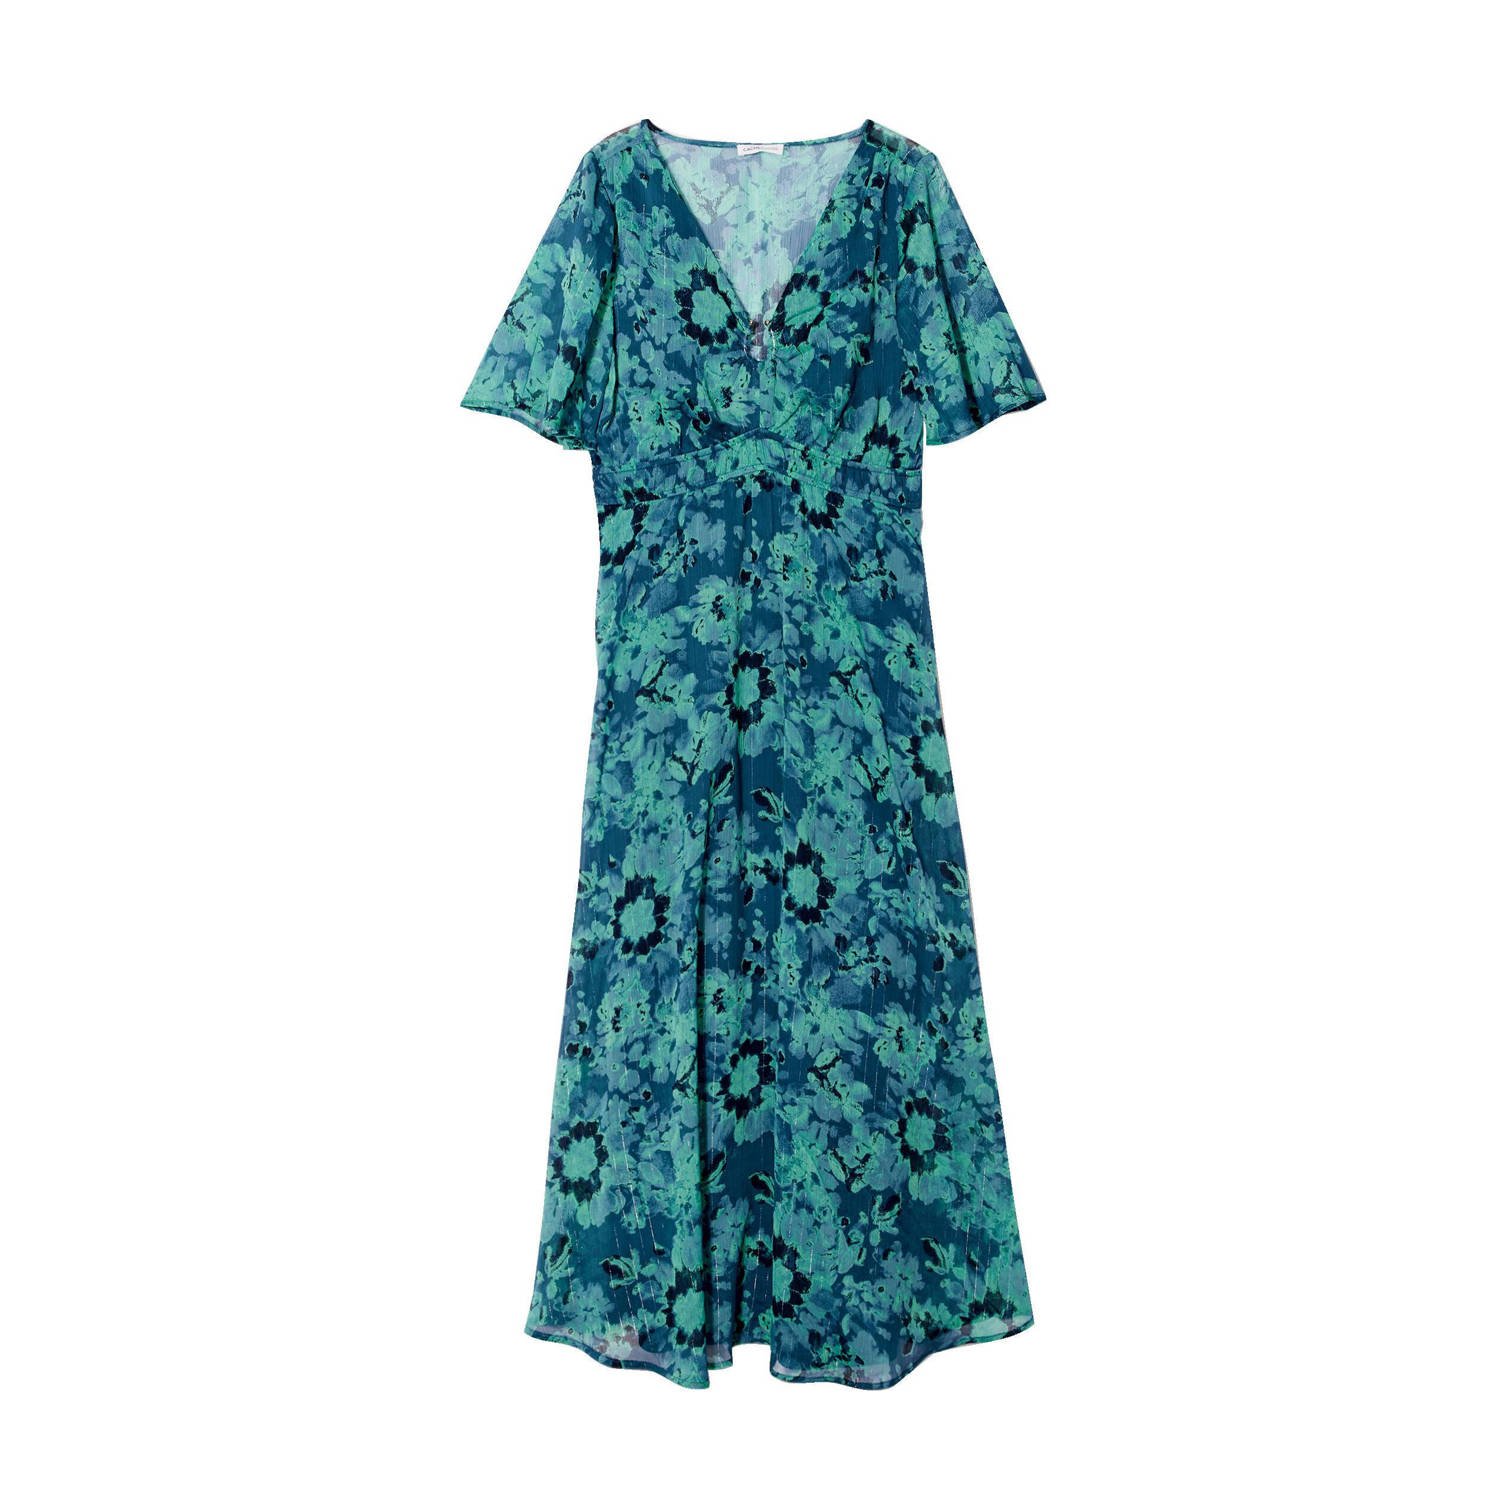 Cache semi-transparante jurk met all over print blauw groen